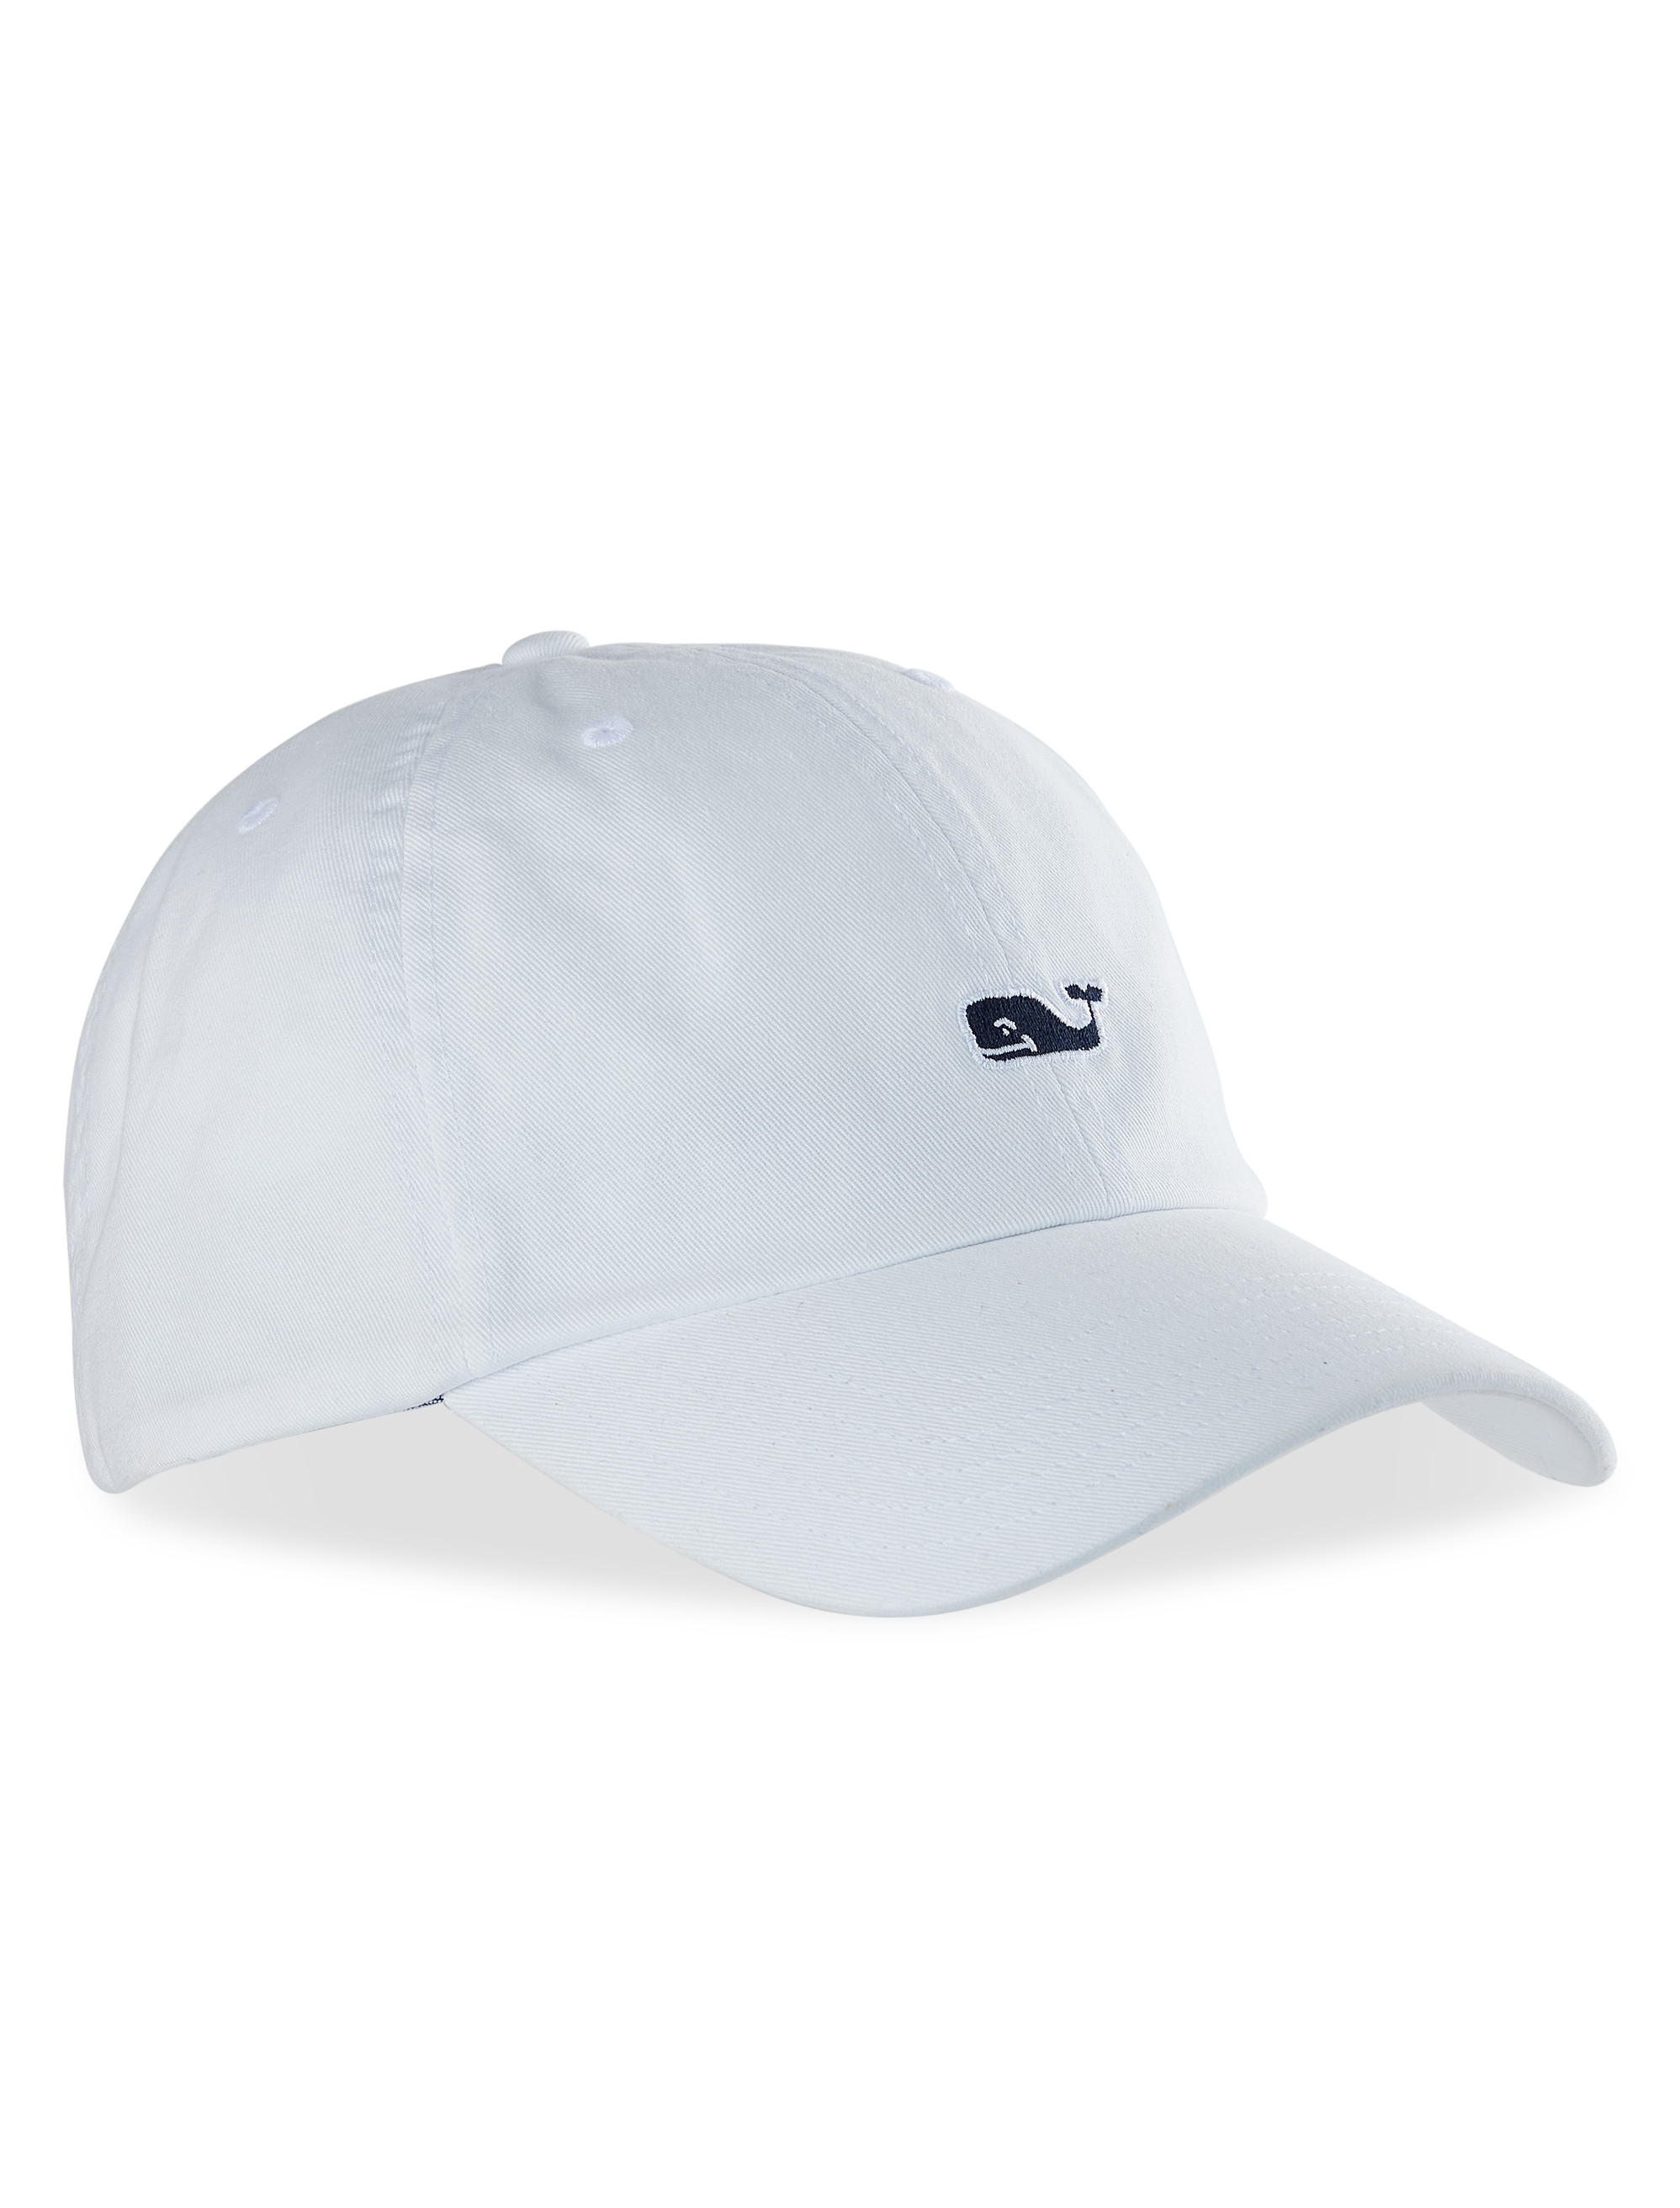 Vineyard Vines Men's Big & Tall Classic Baseball Hat - White - Hats